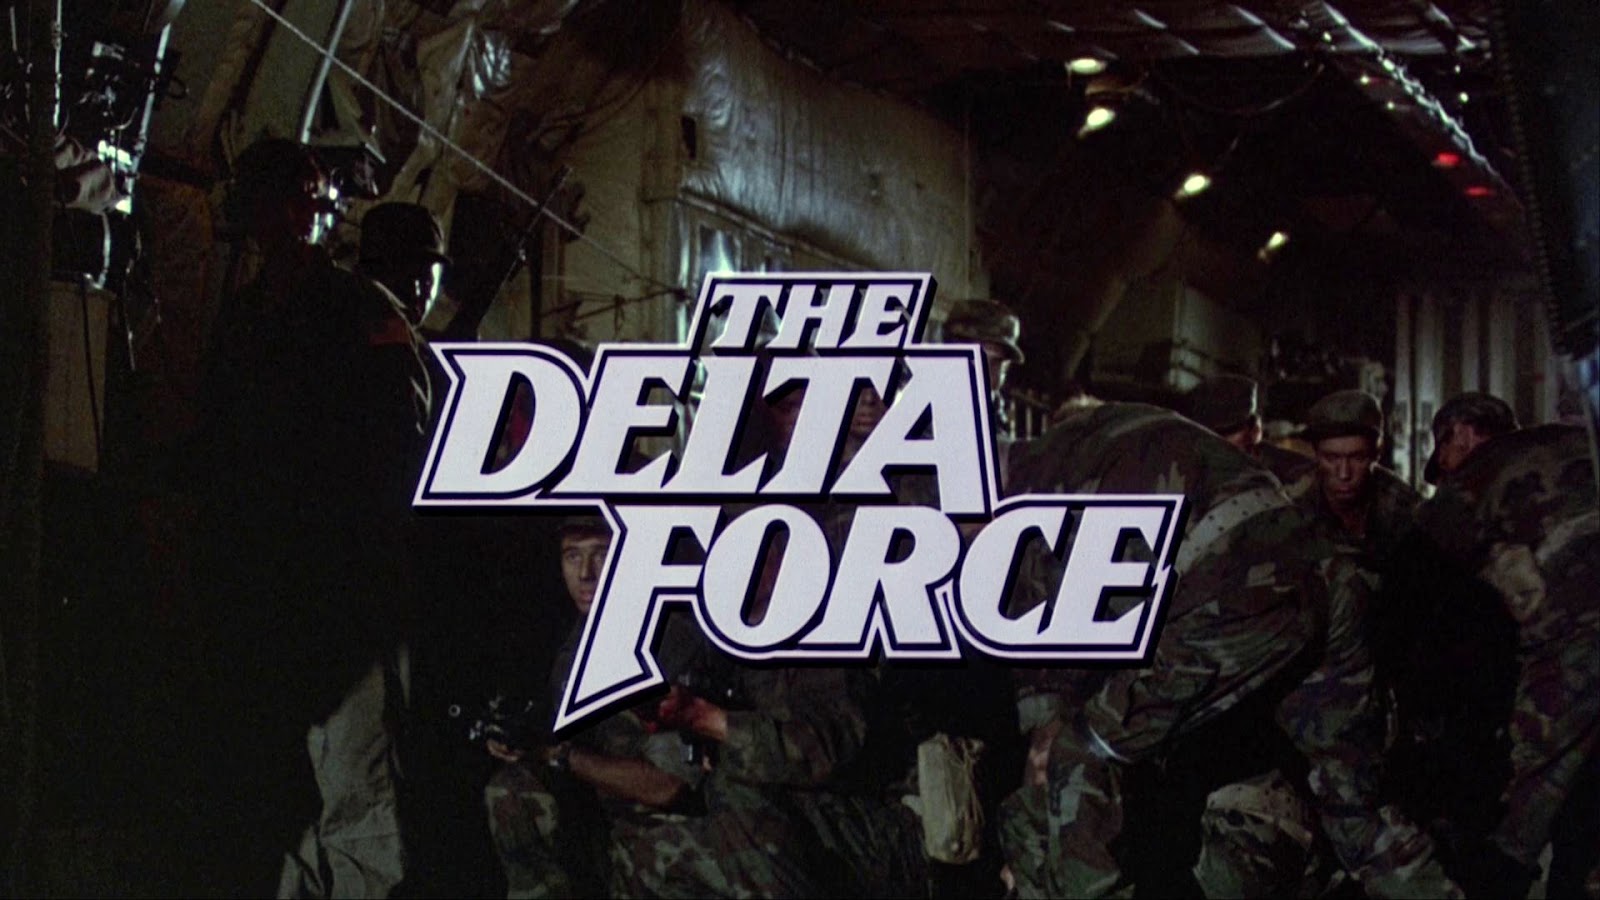 Delta force logo